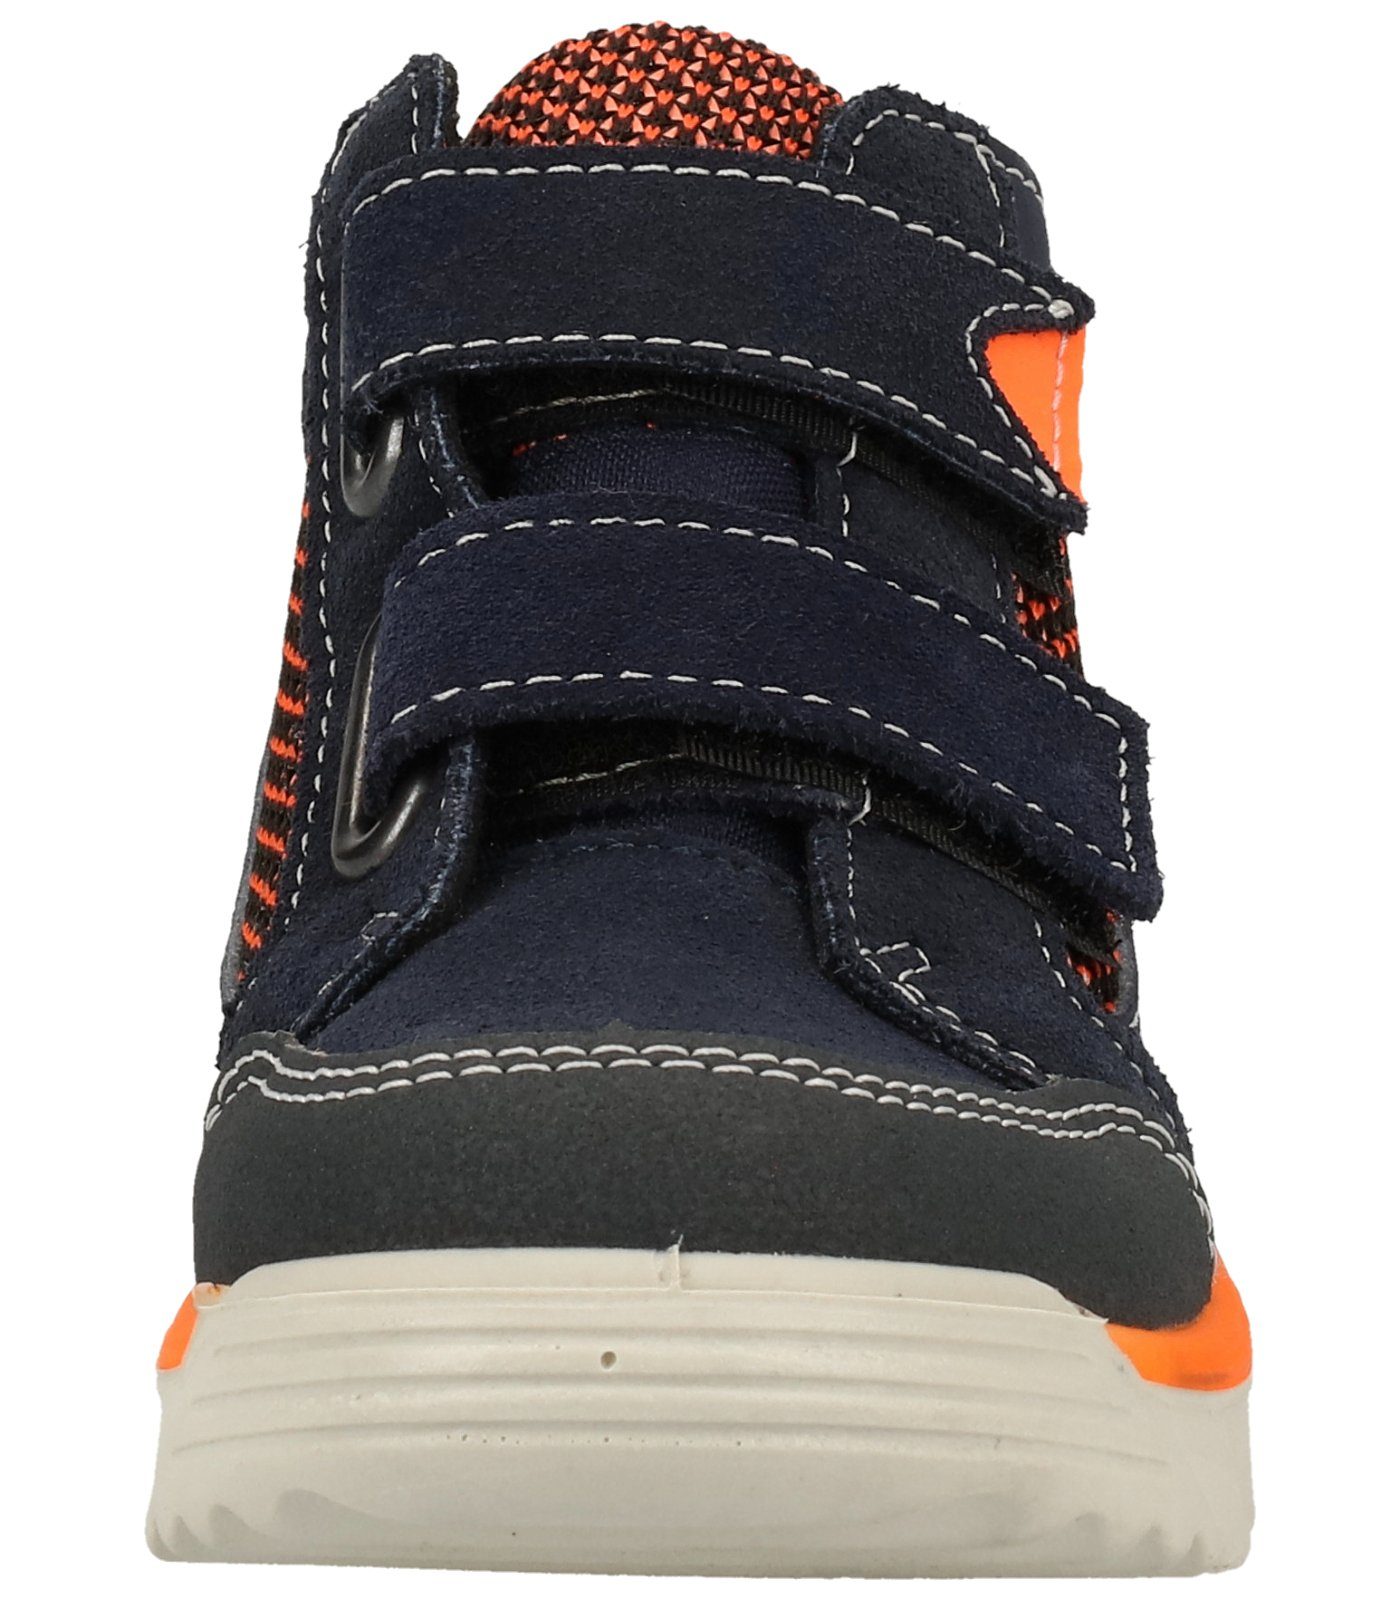 Ricosta Sneaker Leder/Textil Sneaker nautic/orange